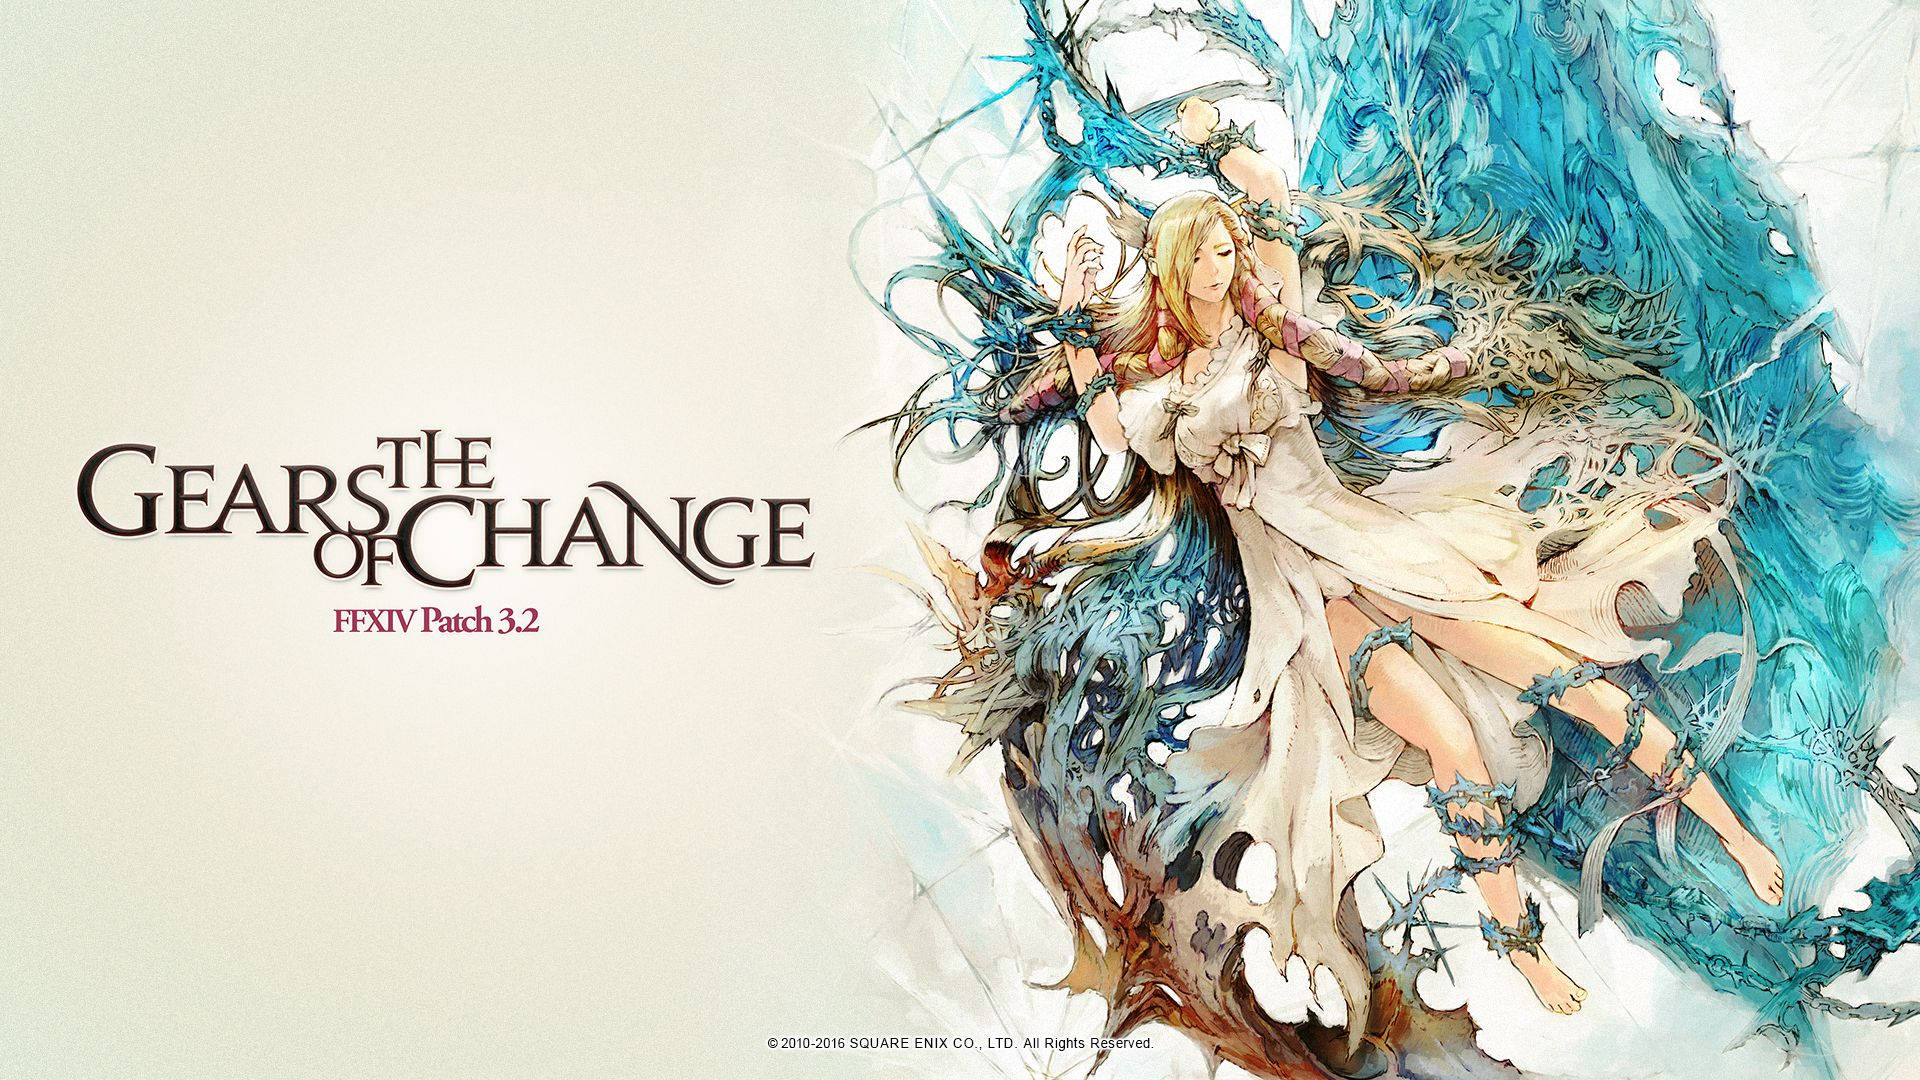 Minfilia Warde of Final Fantasy 14 Heavensward casts her spell Wallpaper